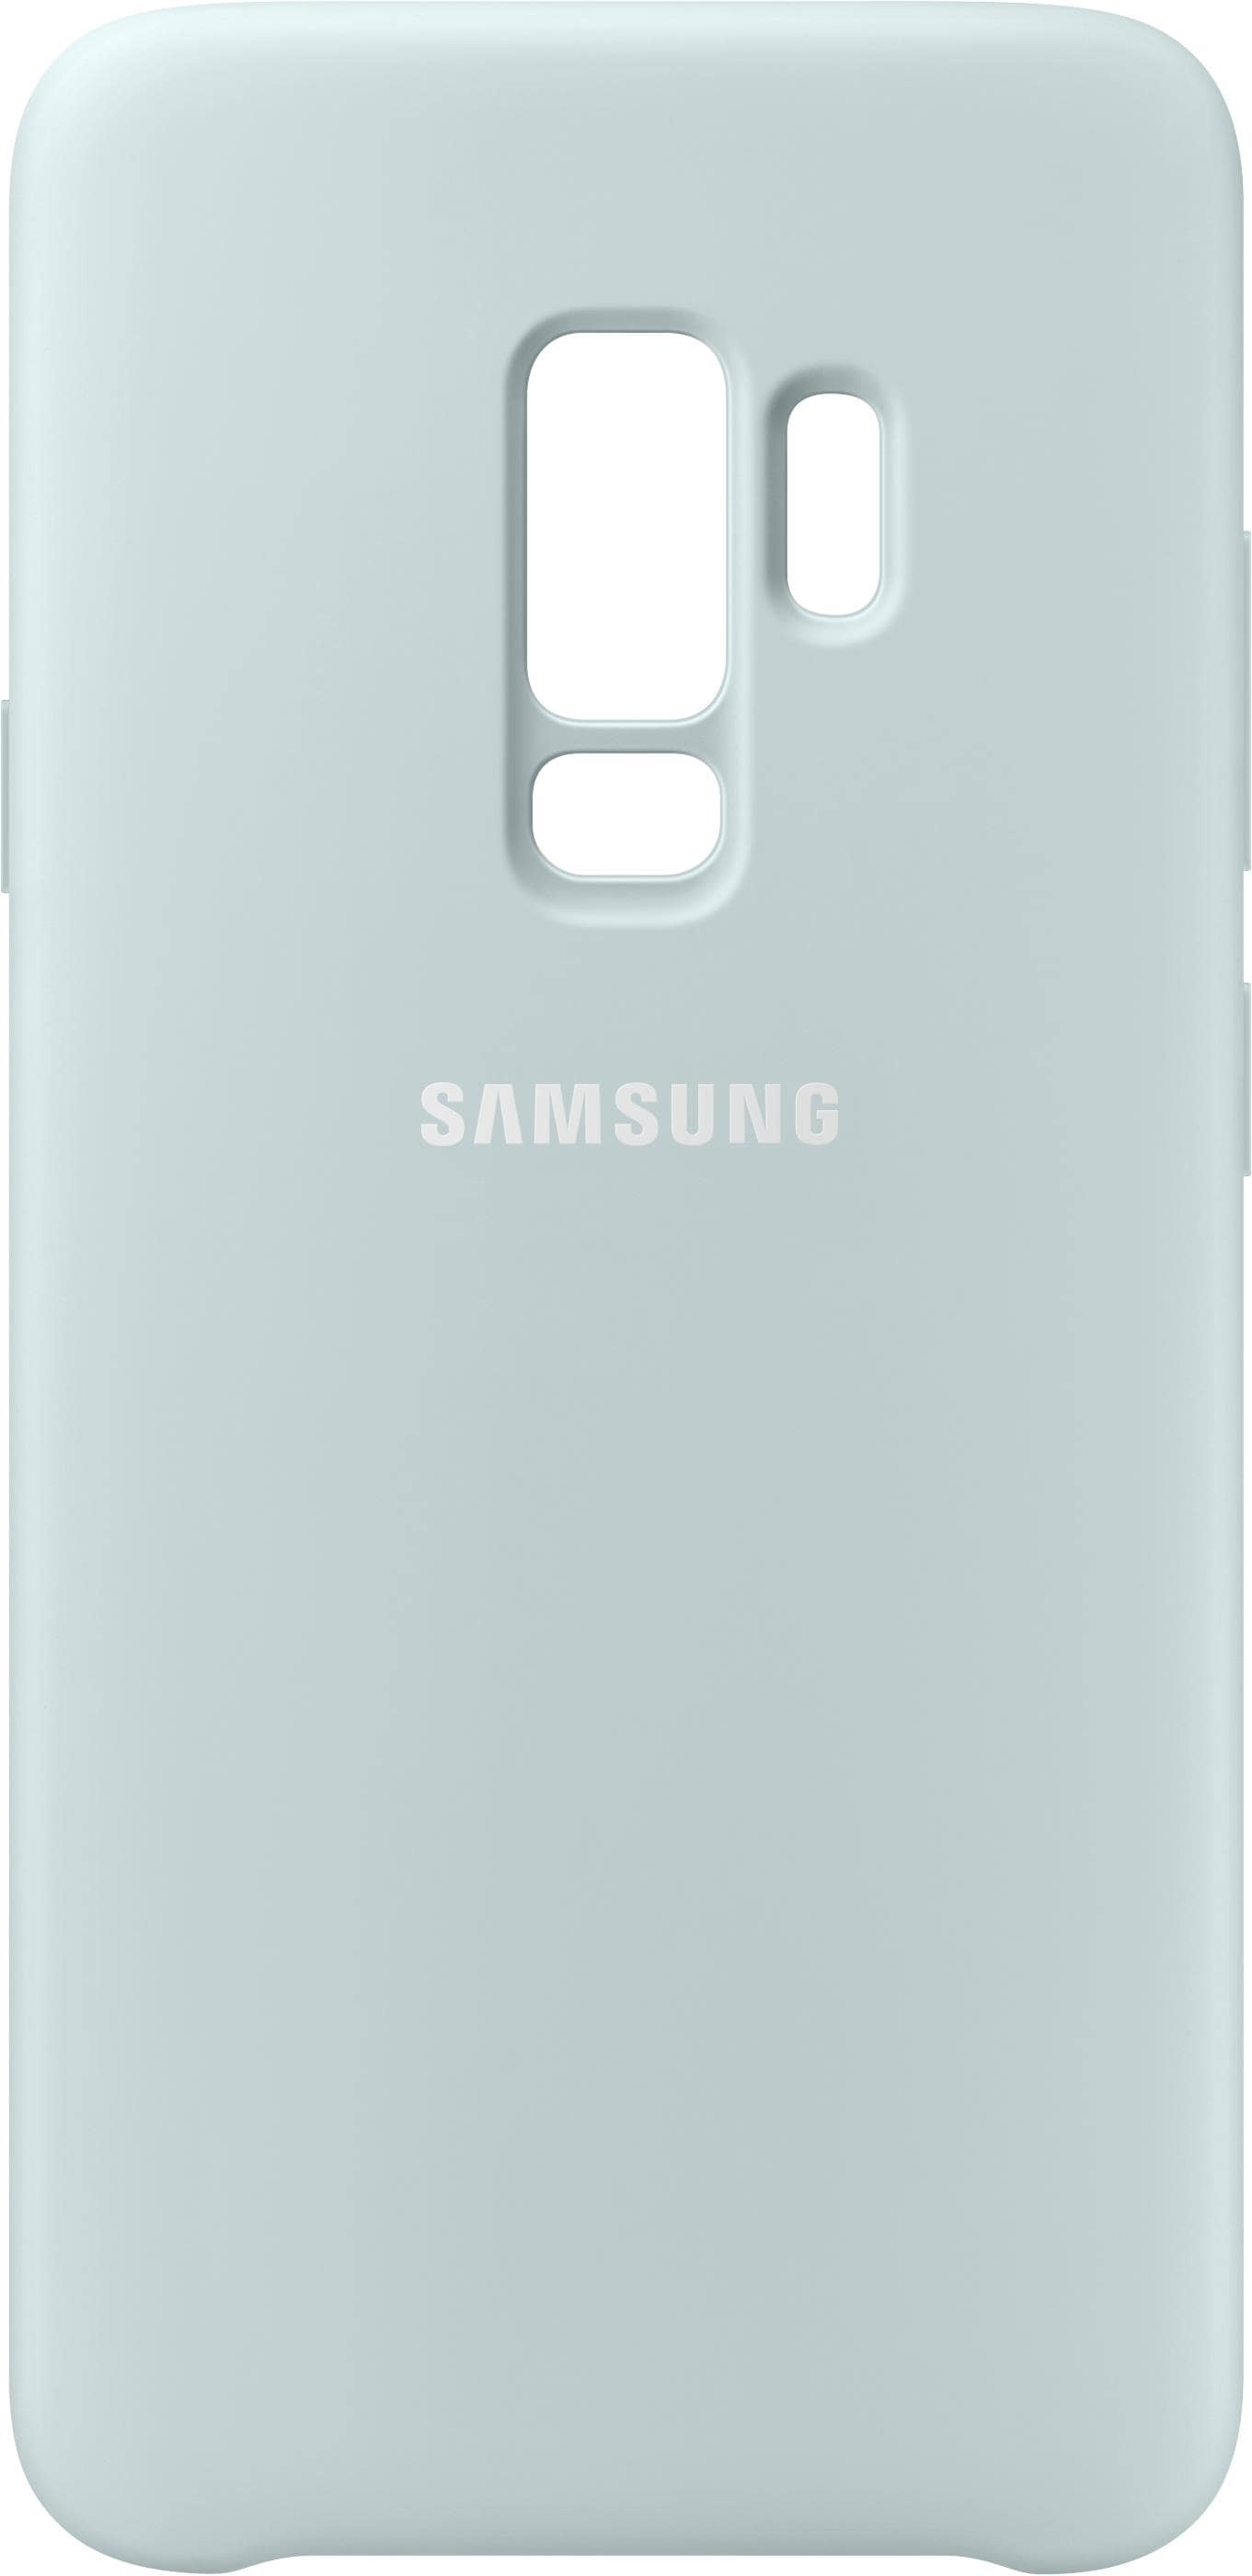 Samsung Silicone Cover (Galaxy S9+), Smartphone Hülle, Blau